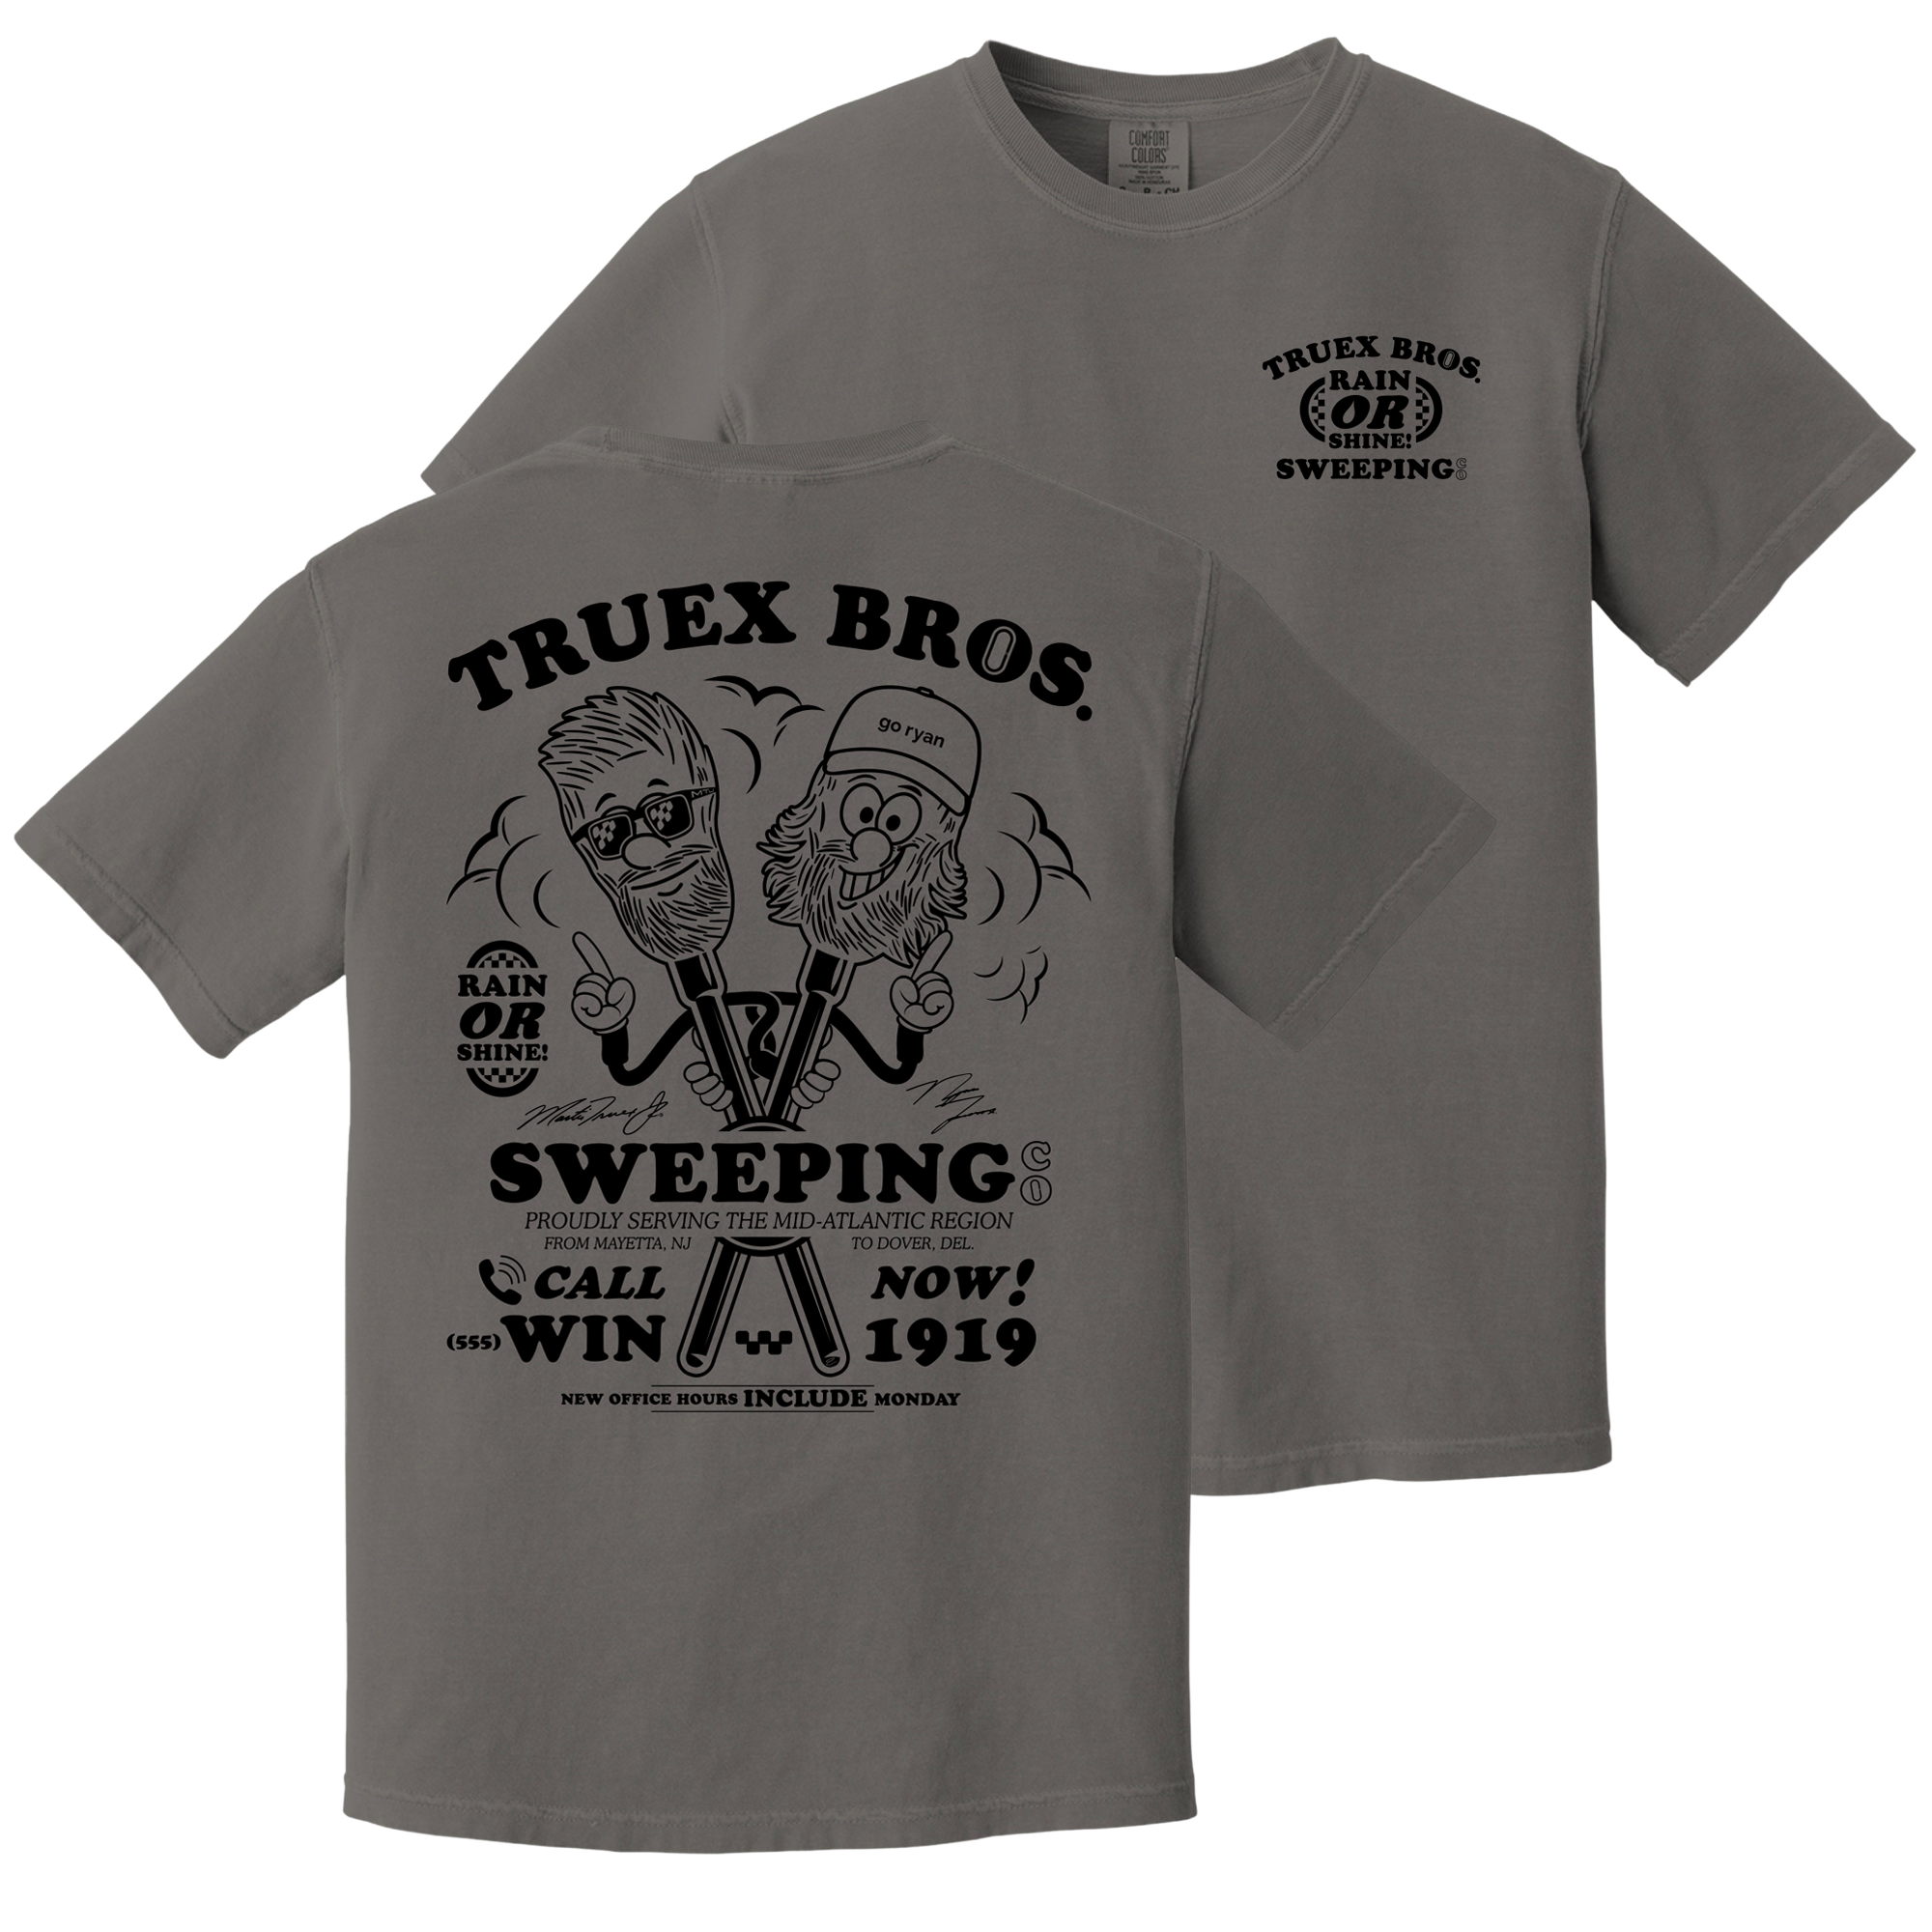 Truex Brothers Sweeping Co. Tee